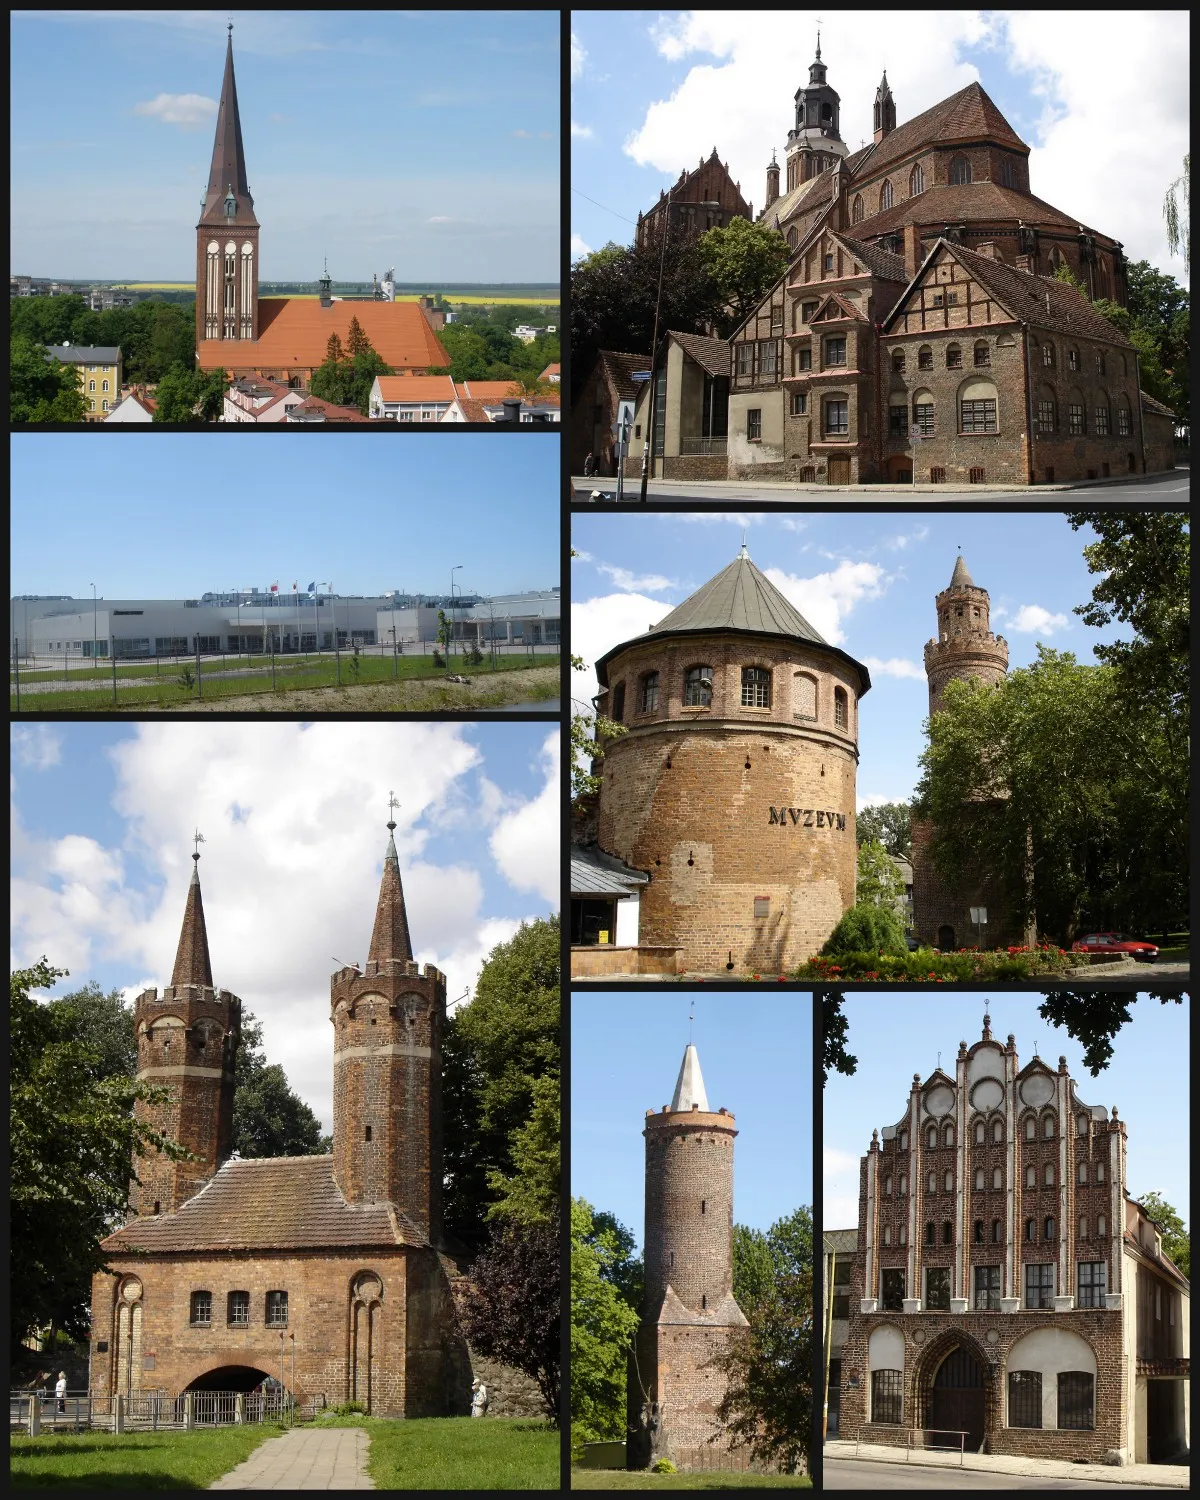 Photo showing: Joanniskirche, Marienkirche, Bridgestone Fabrik, Bastei und Eis Turm, Mühlentor, Weisskopf Turm, Protzen Haus